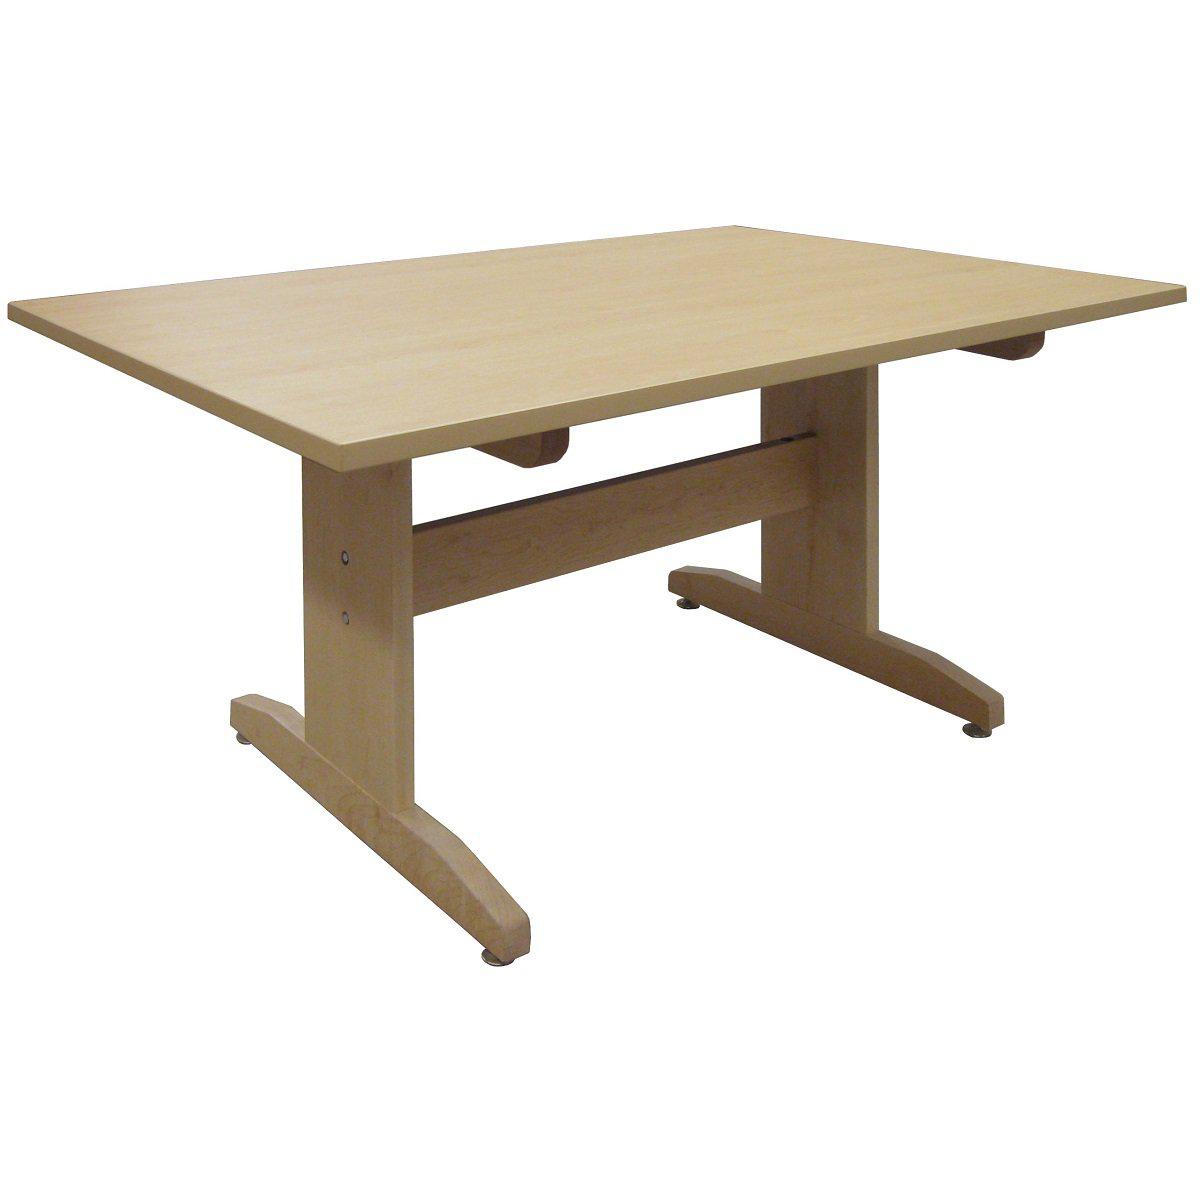 Art Table, 42" x 72" Maple Grain Patterned HPL Top, 30" High